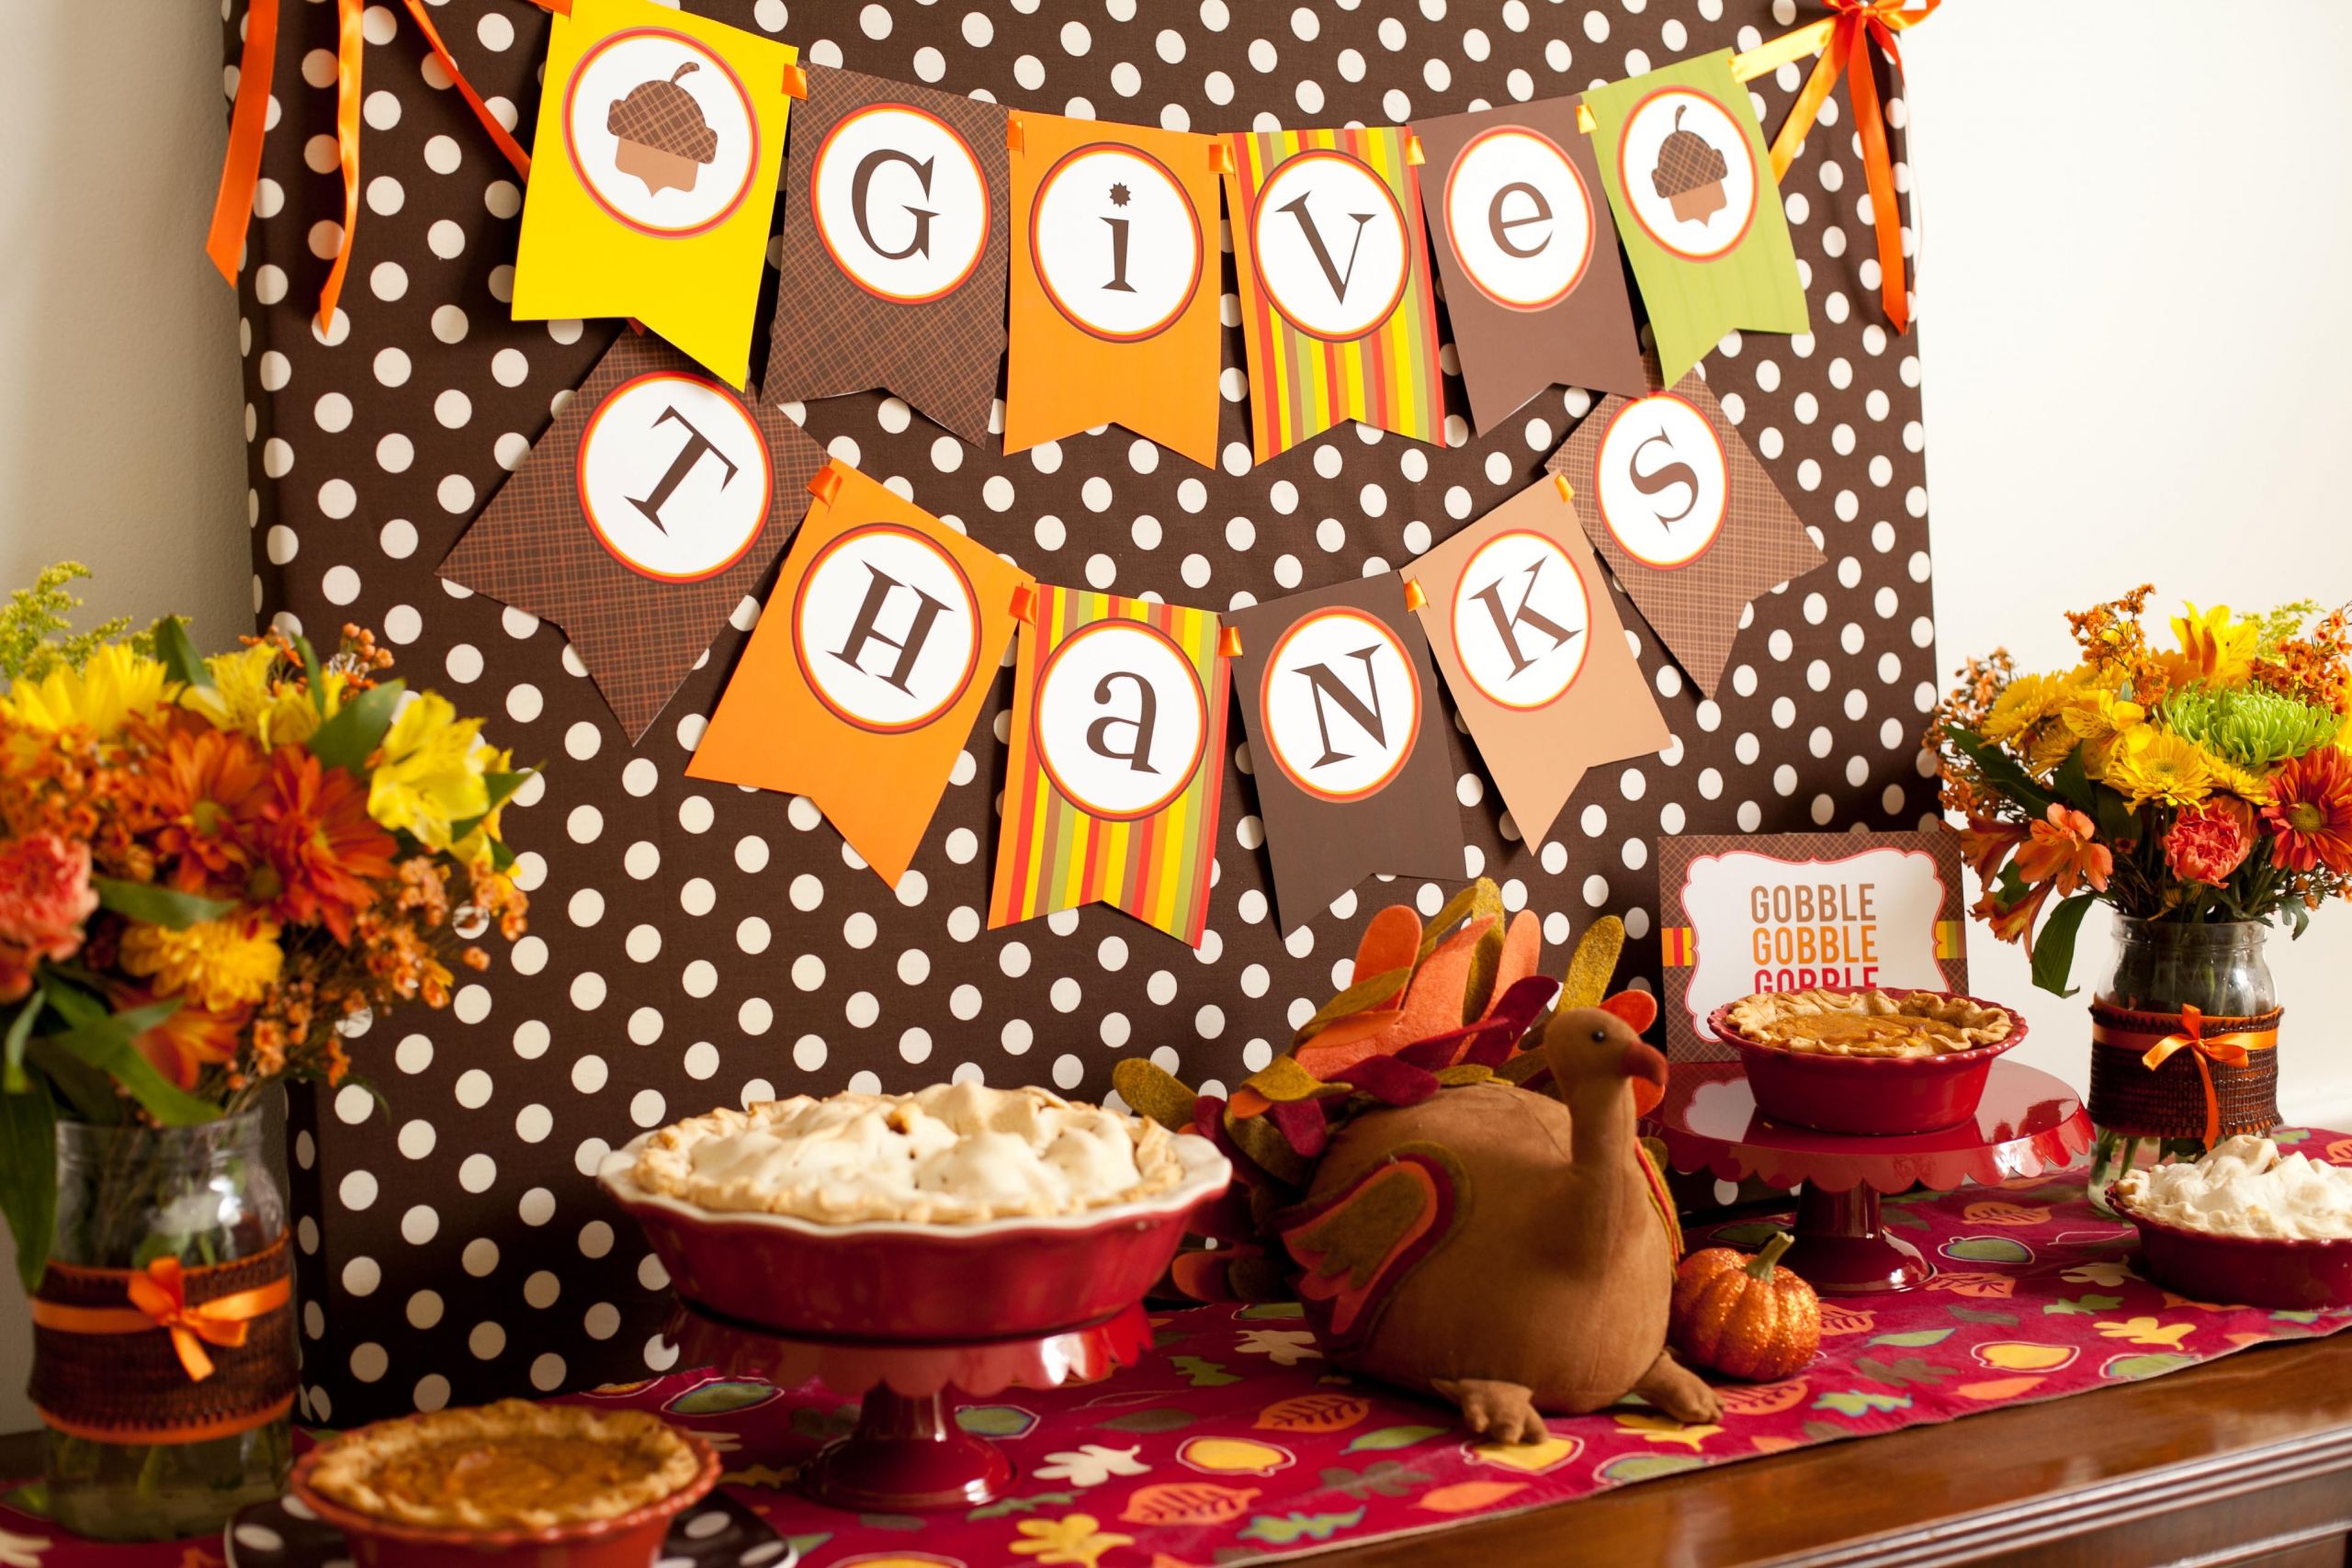 DIY Thanksgiving Decorations Ideas
 17 Creative and Fun DIY Decorations for Thanksgiving